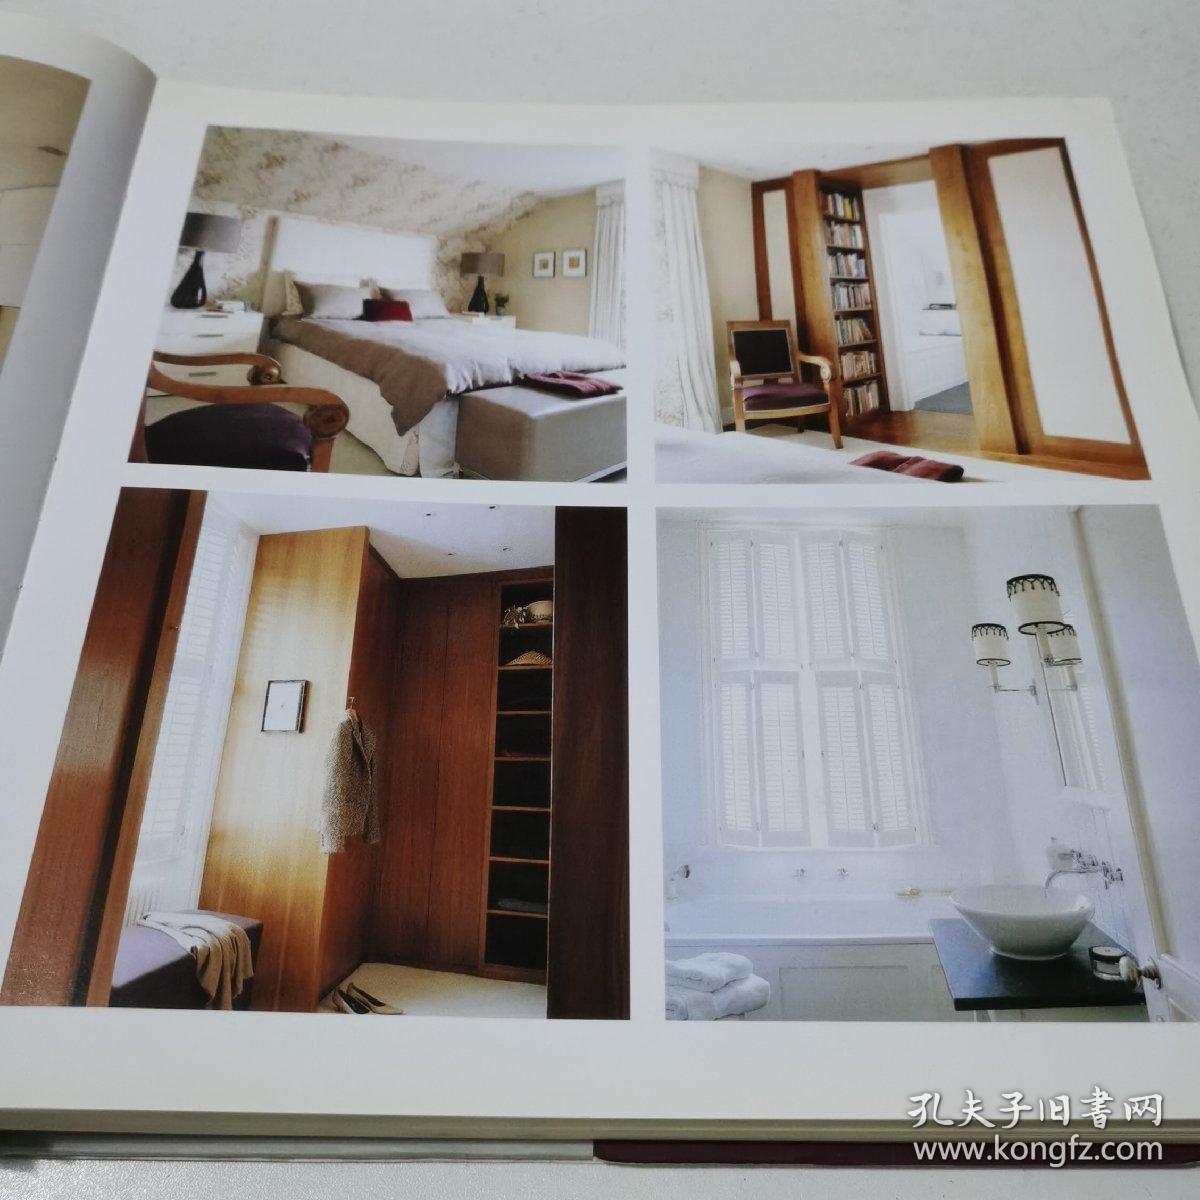 More Dream Homes: 100 Inspirational Interiors精装正版